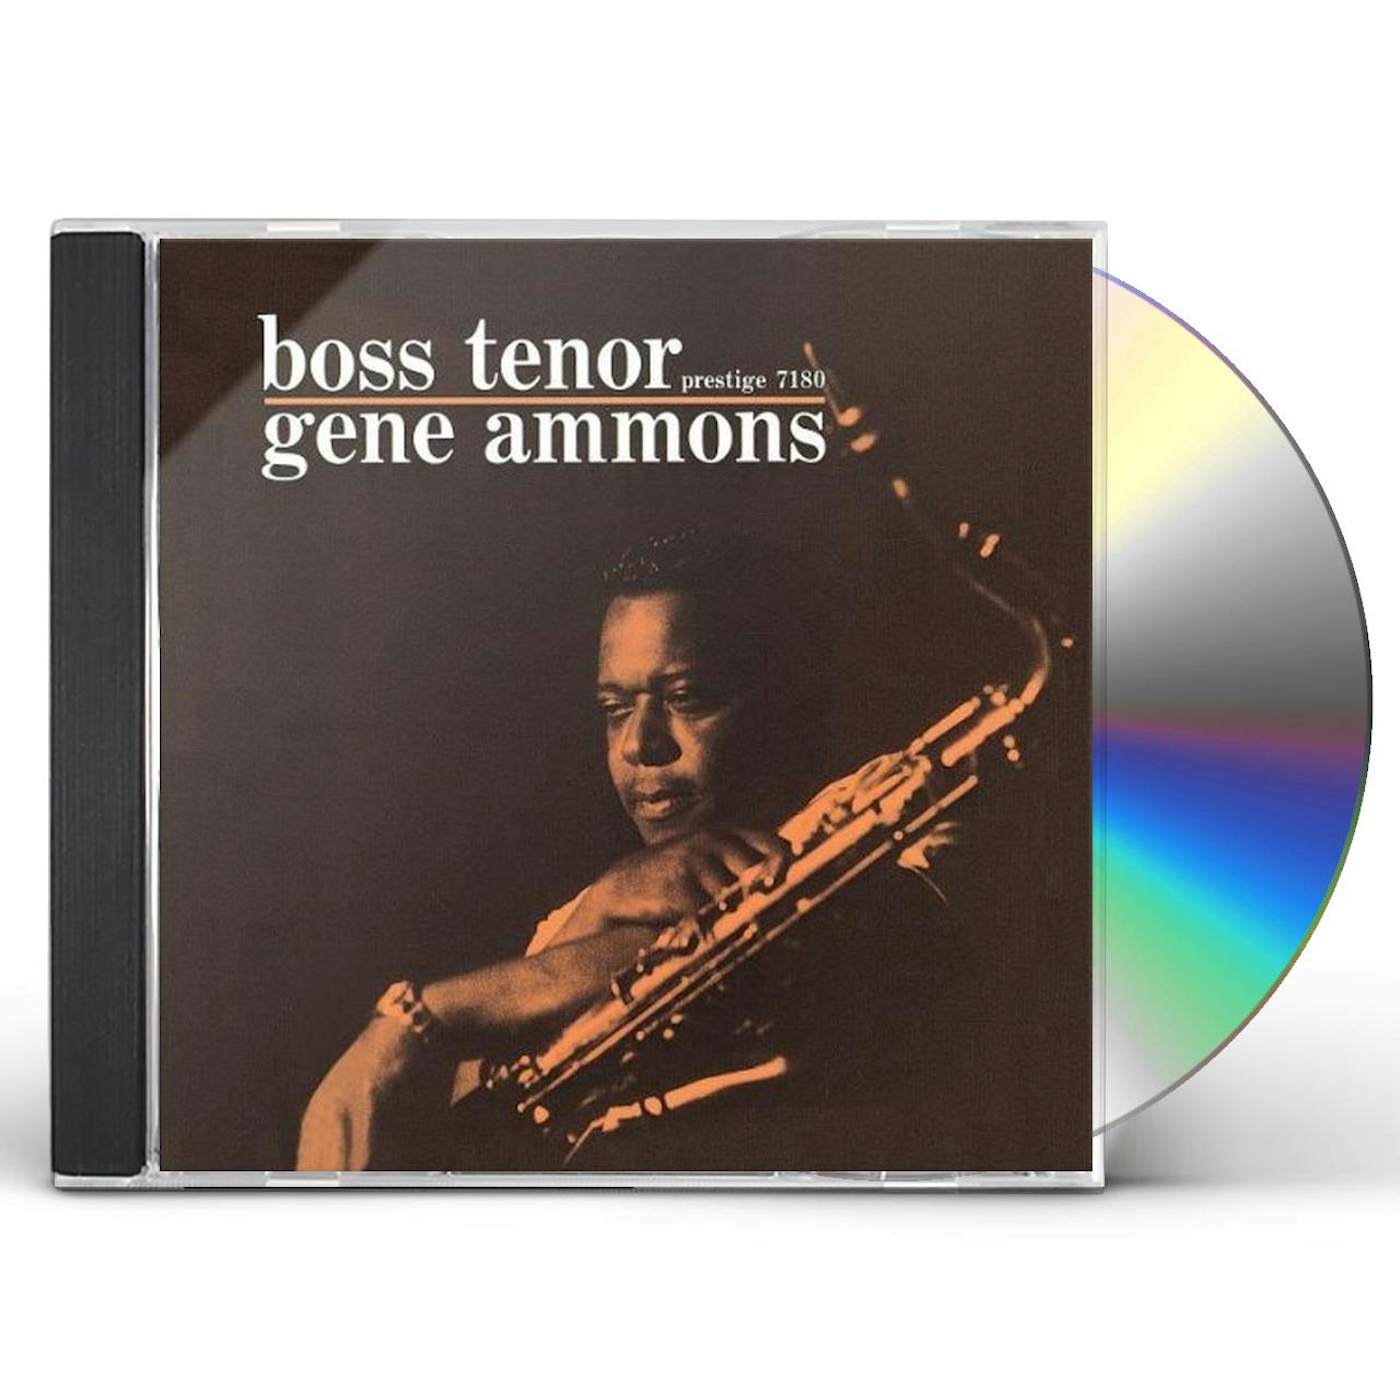 Gene Ammons BOSS TENOR CD